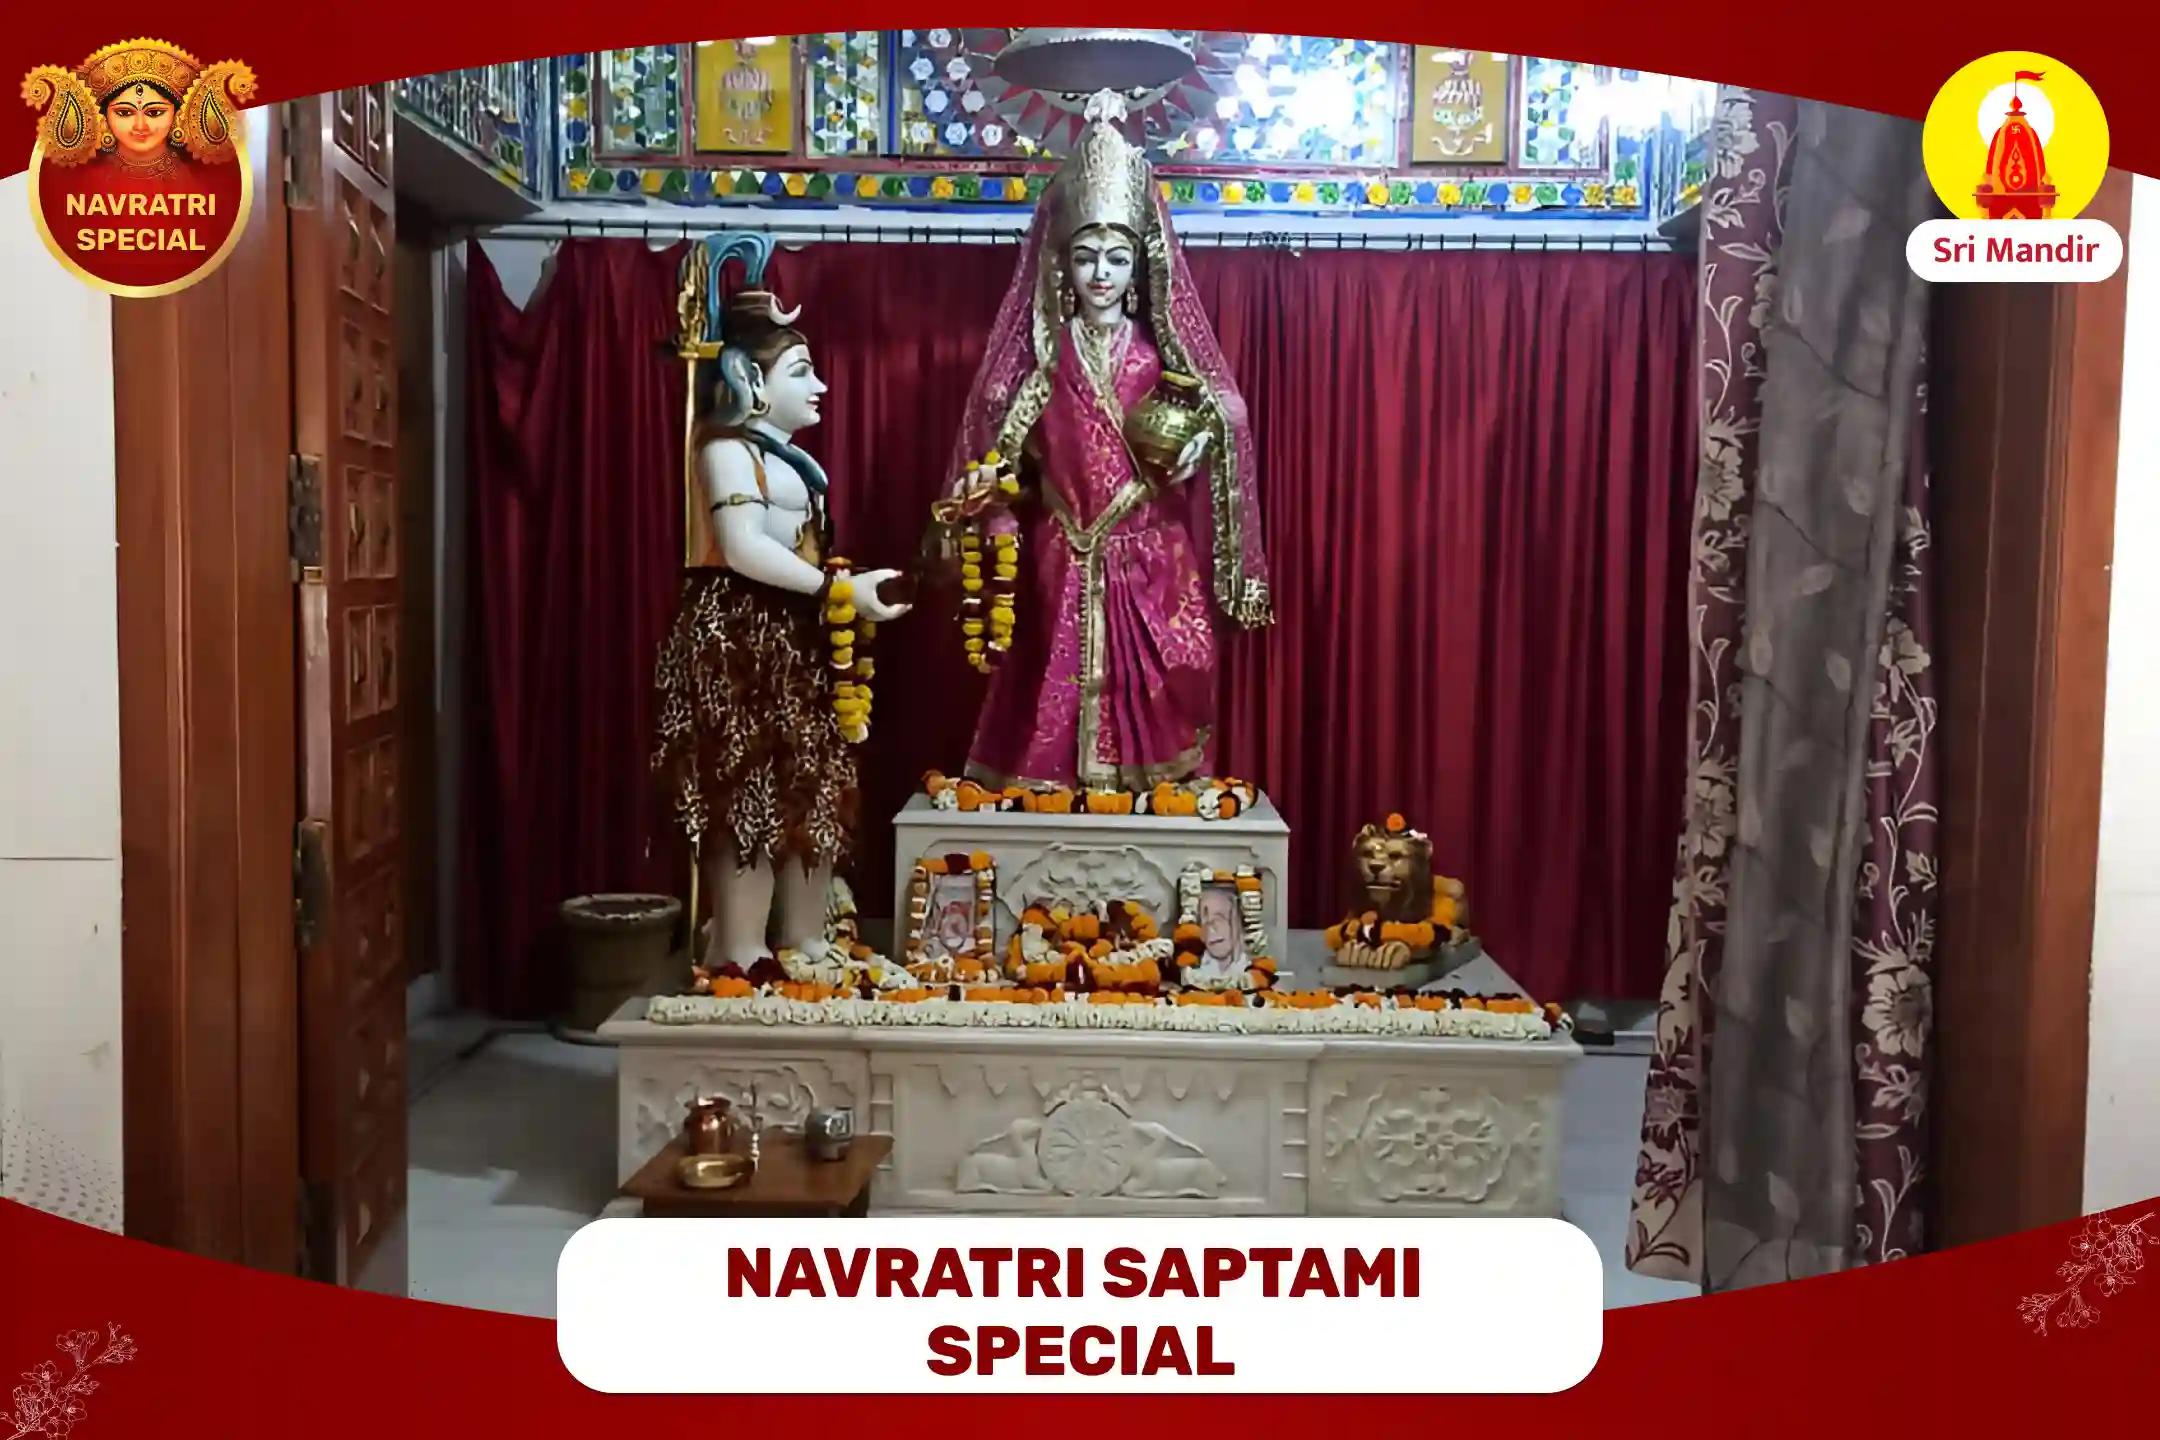 Navratri Saptami Special Maa Annapurna Mahapuja, Annapurna Ashtakam Path and Anna Daan for Nourishment and Abundance